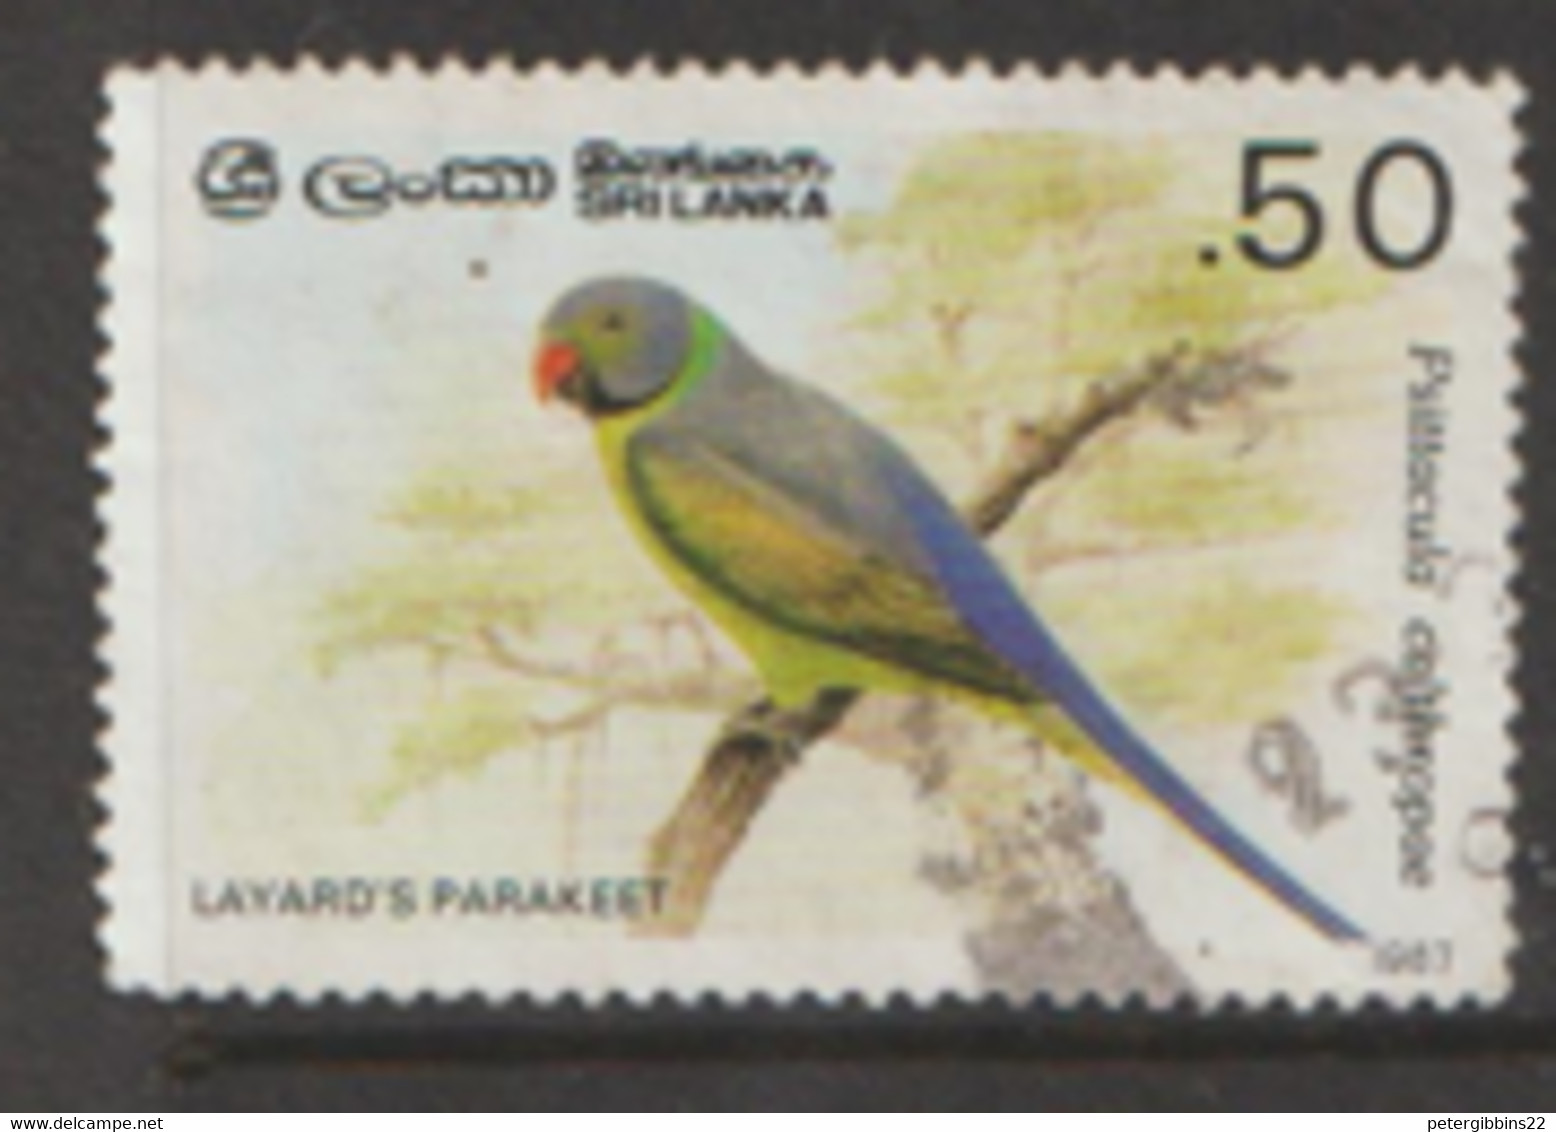 Sri Lanka  1987   SG 985a  Layards Parakeet   Fine Used - Sri Lanka (Ceylon) (1948-...)